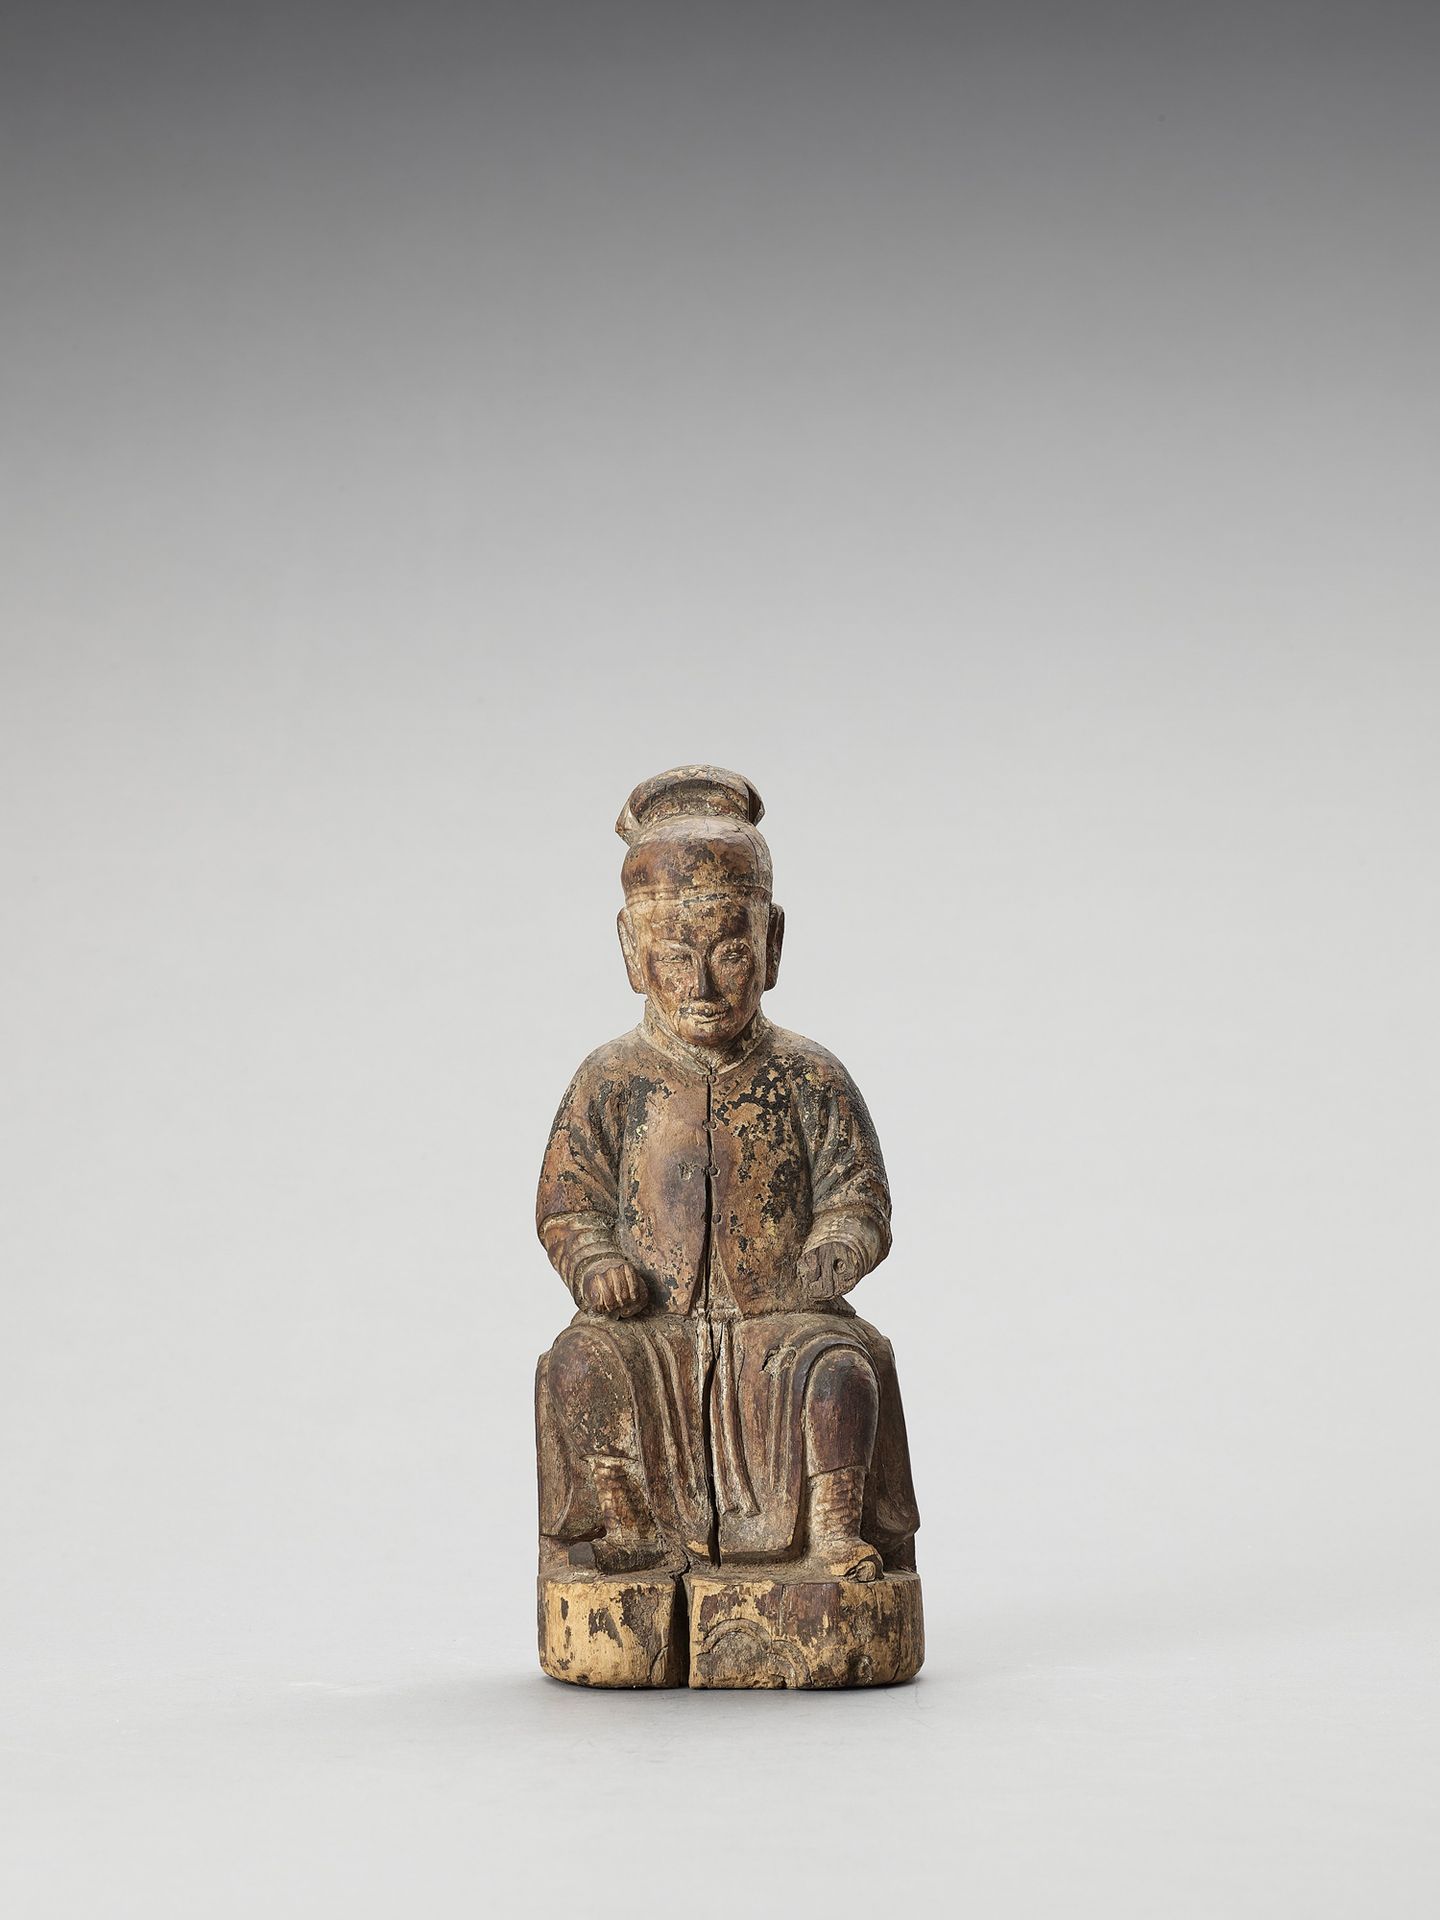 A WOOD FIGURE OF A DIGNITARY, MING 明代贵族木雕，
中国，明朝（1368-1644）。贵族坐在树桩上，穿着带扣的长袍，戴着头饰&hellip;